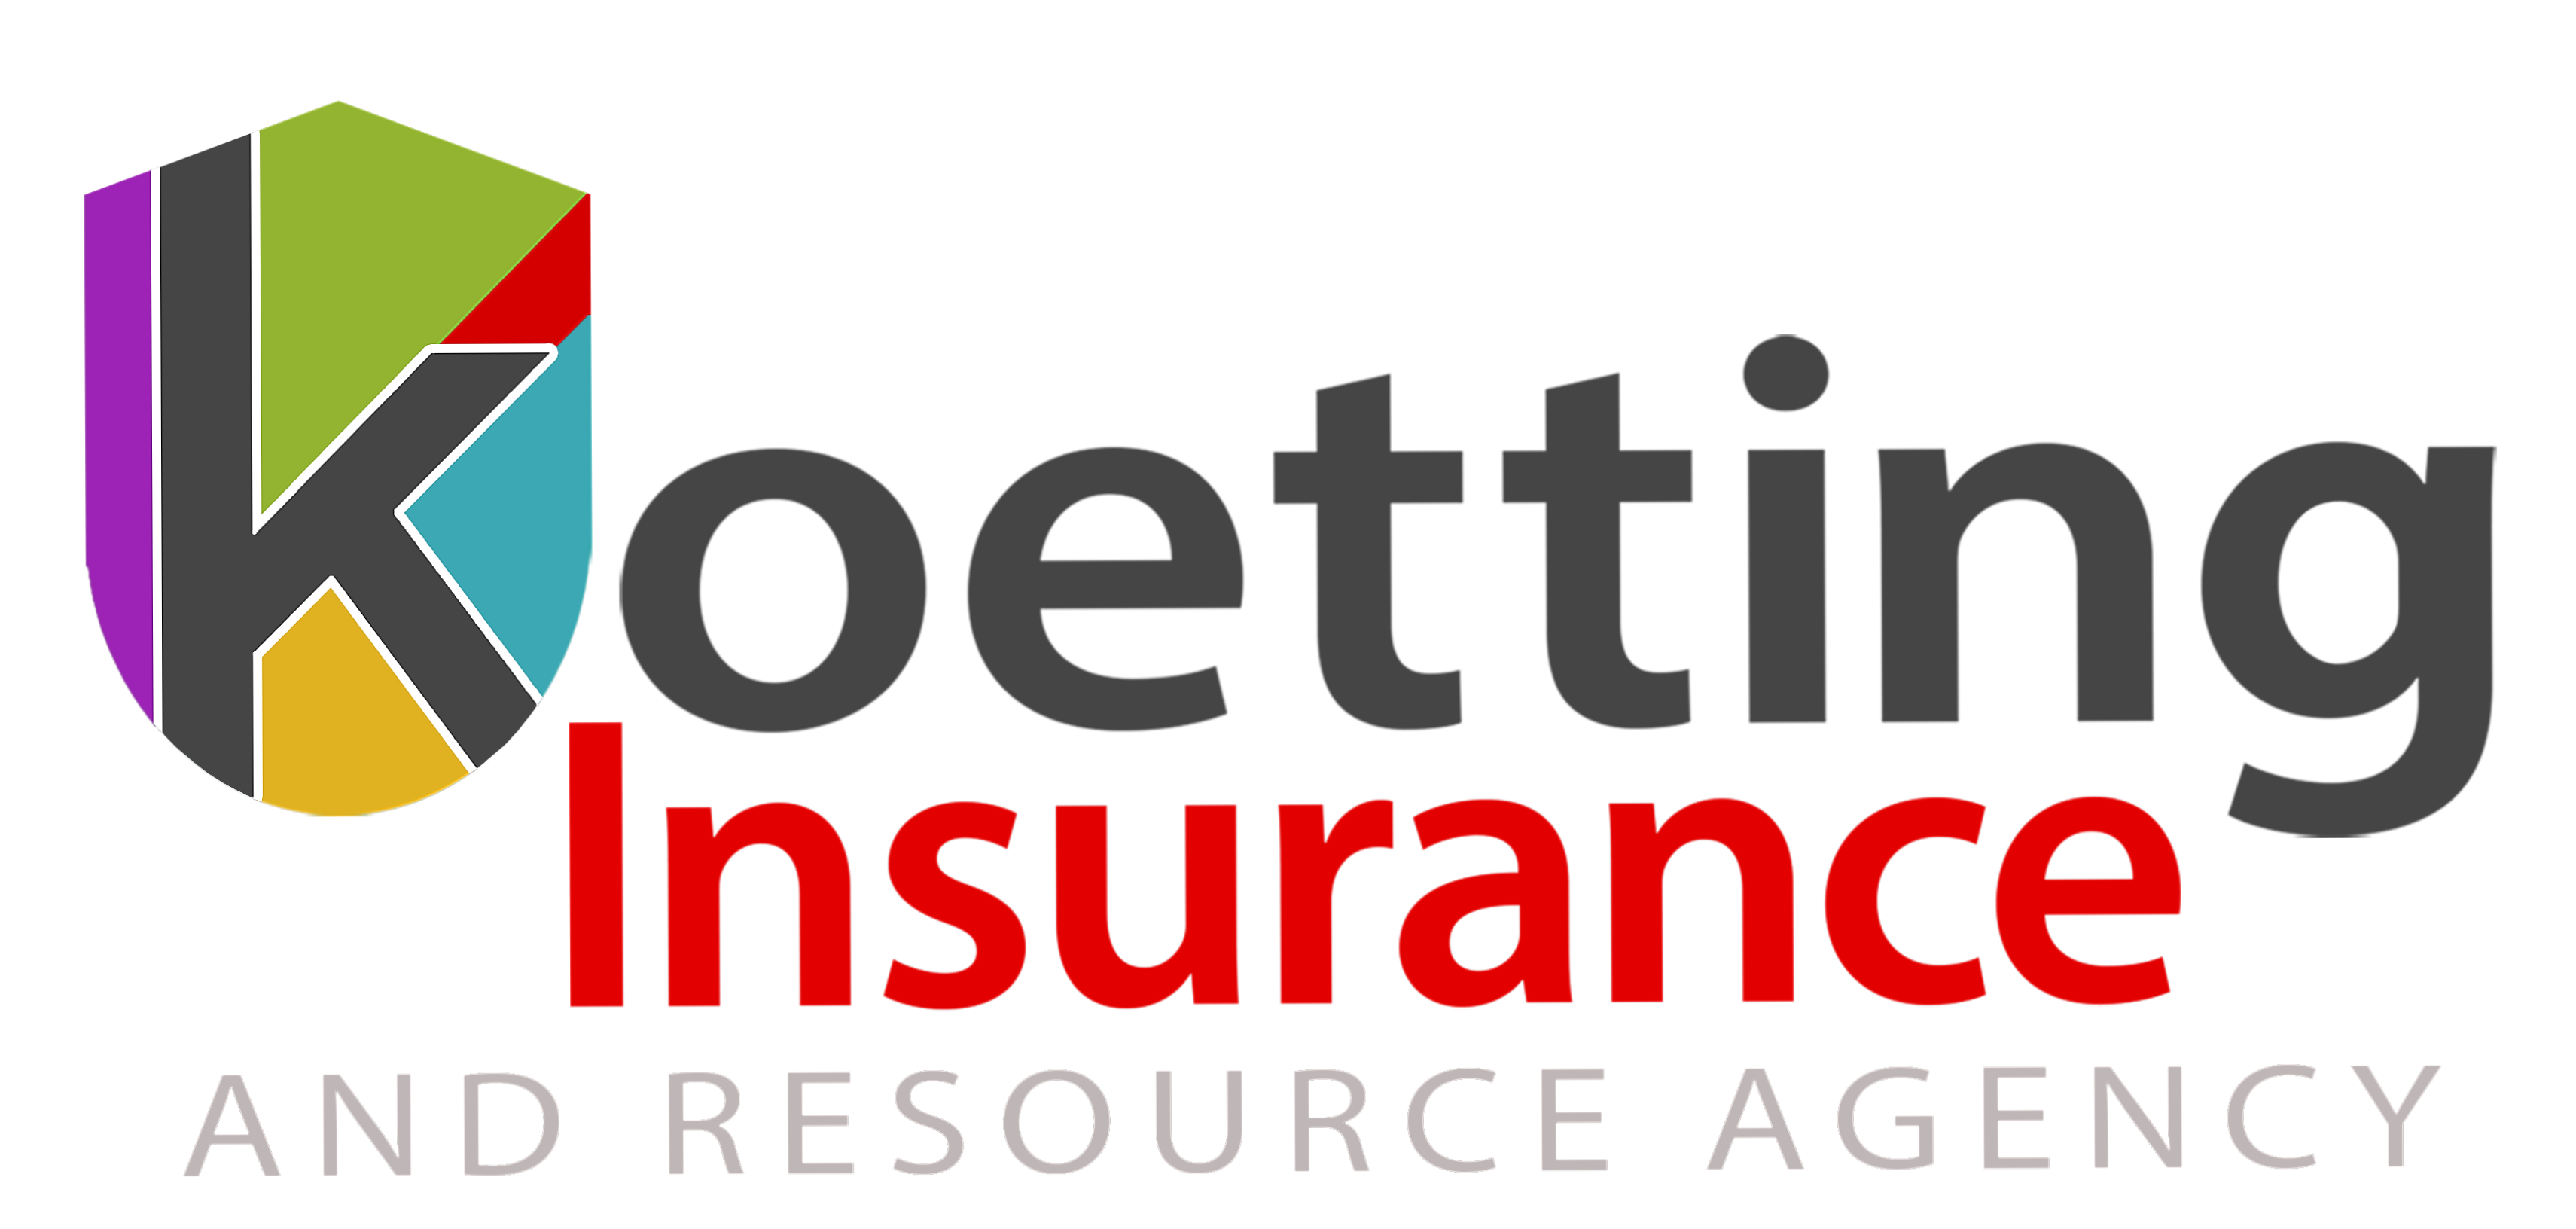 Koetting Insurance Agency